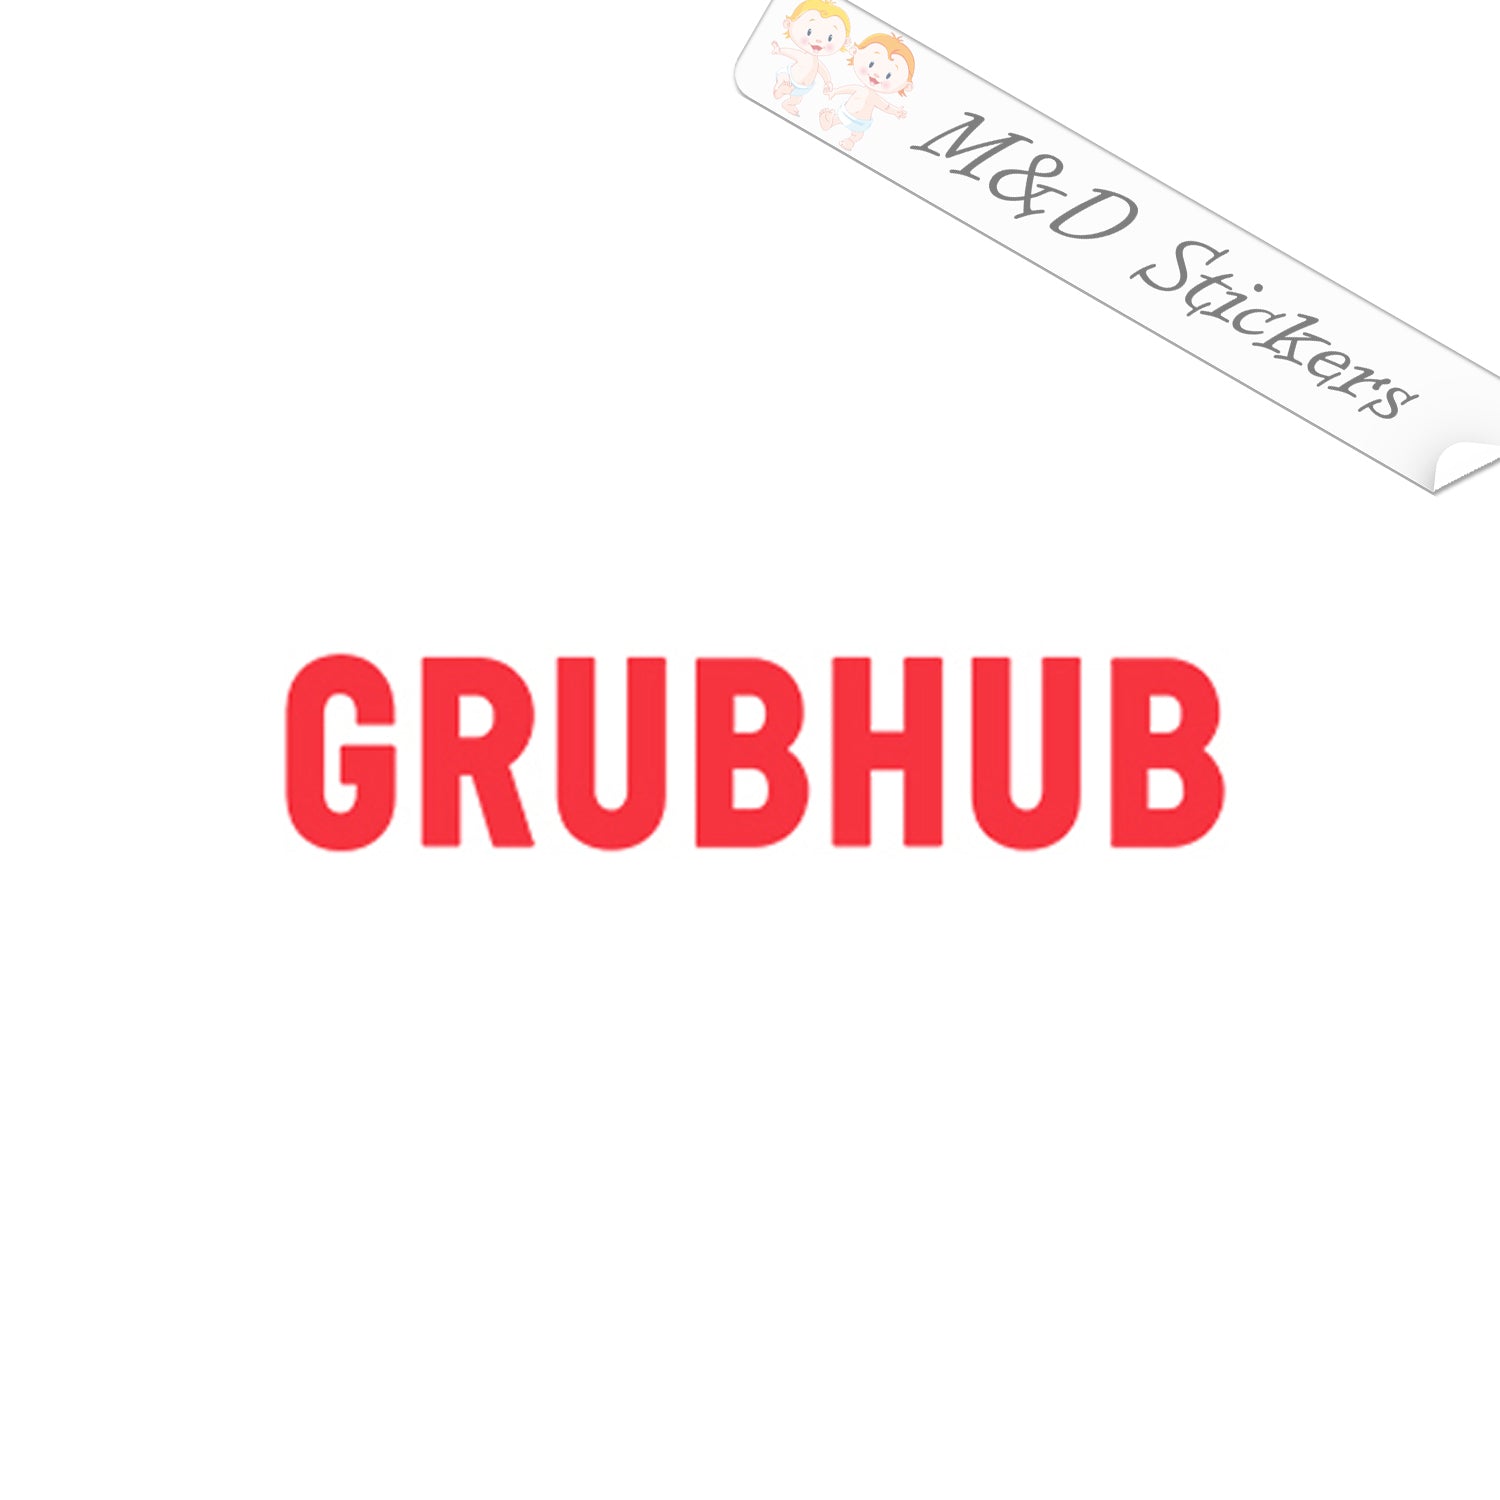 grubhub icon